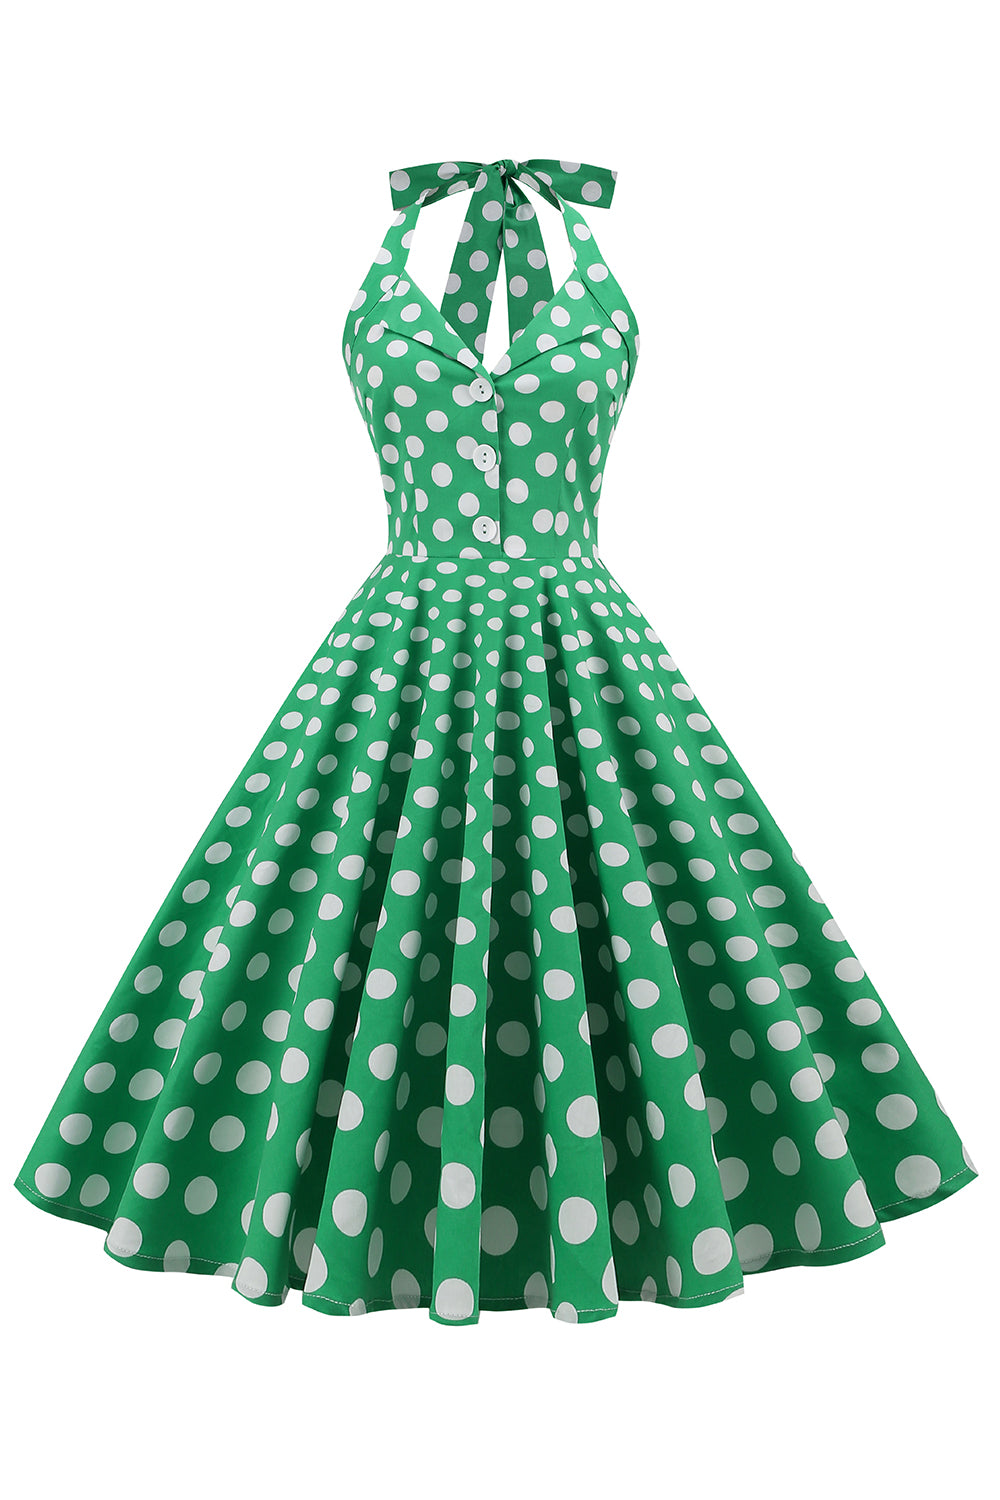 ZAPAKA Women Vintage Dress Green Halter Polka Dots Print A-line 1950s ...